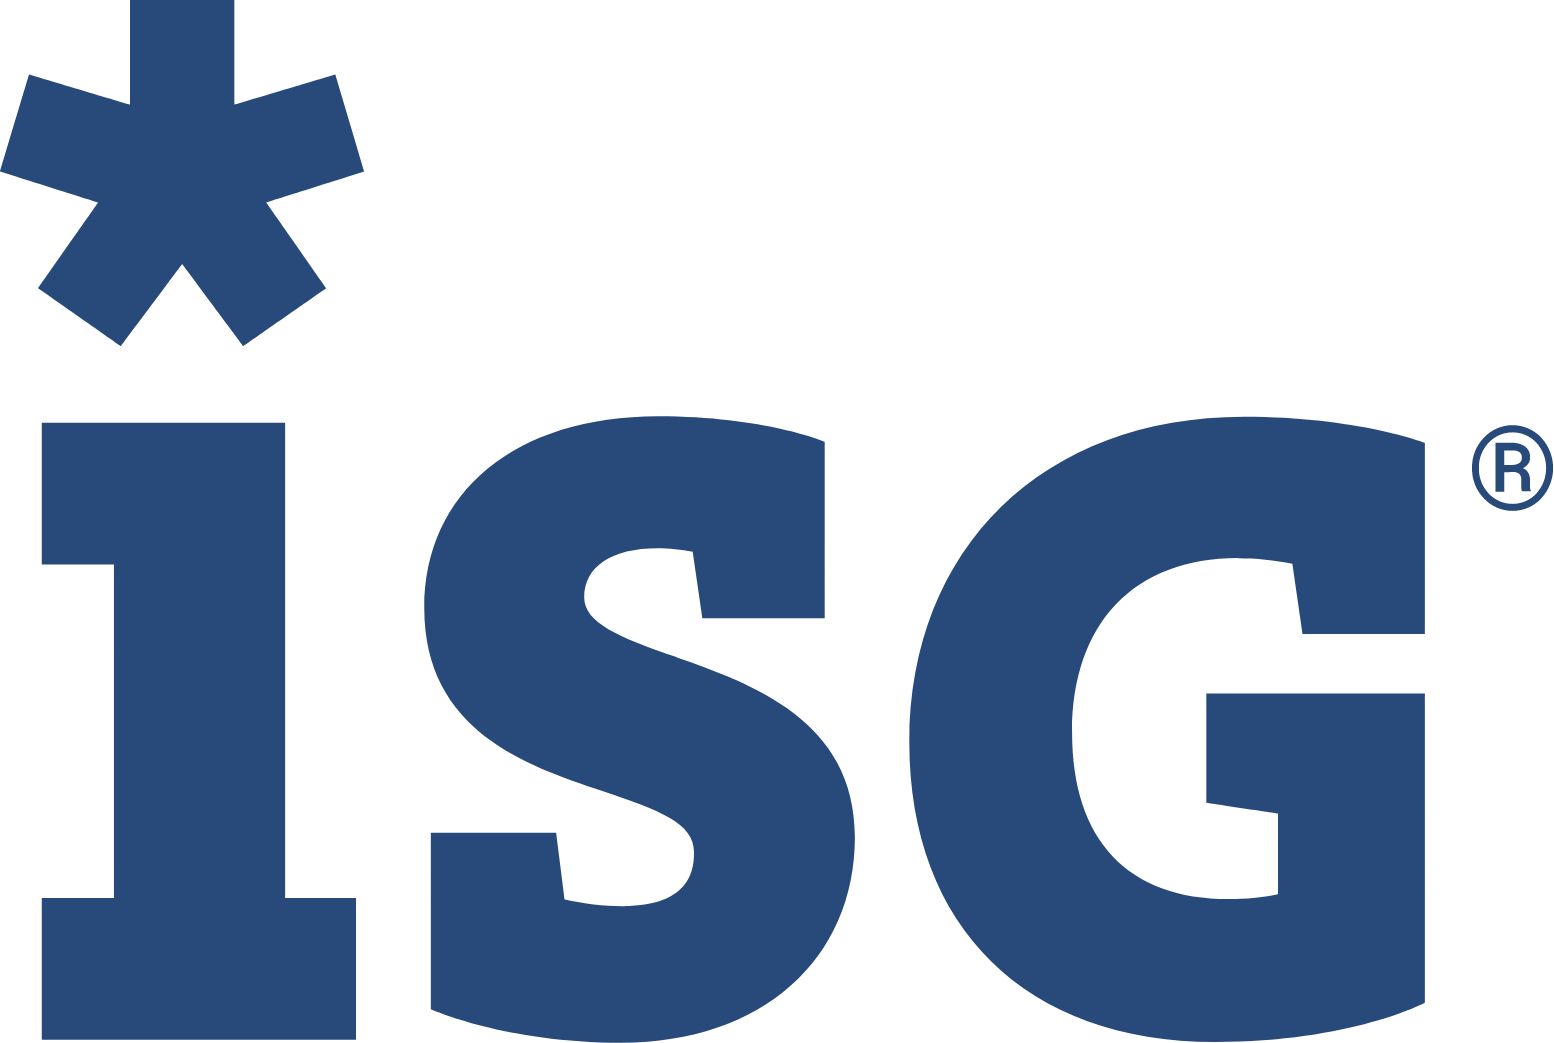 Information Services Group logo large (transparent PNG)